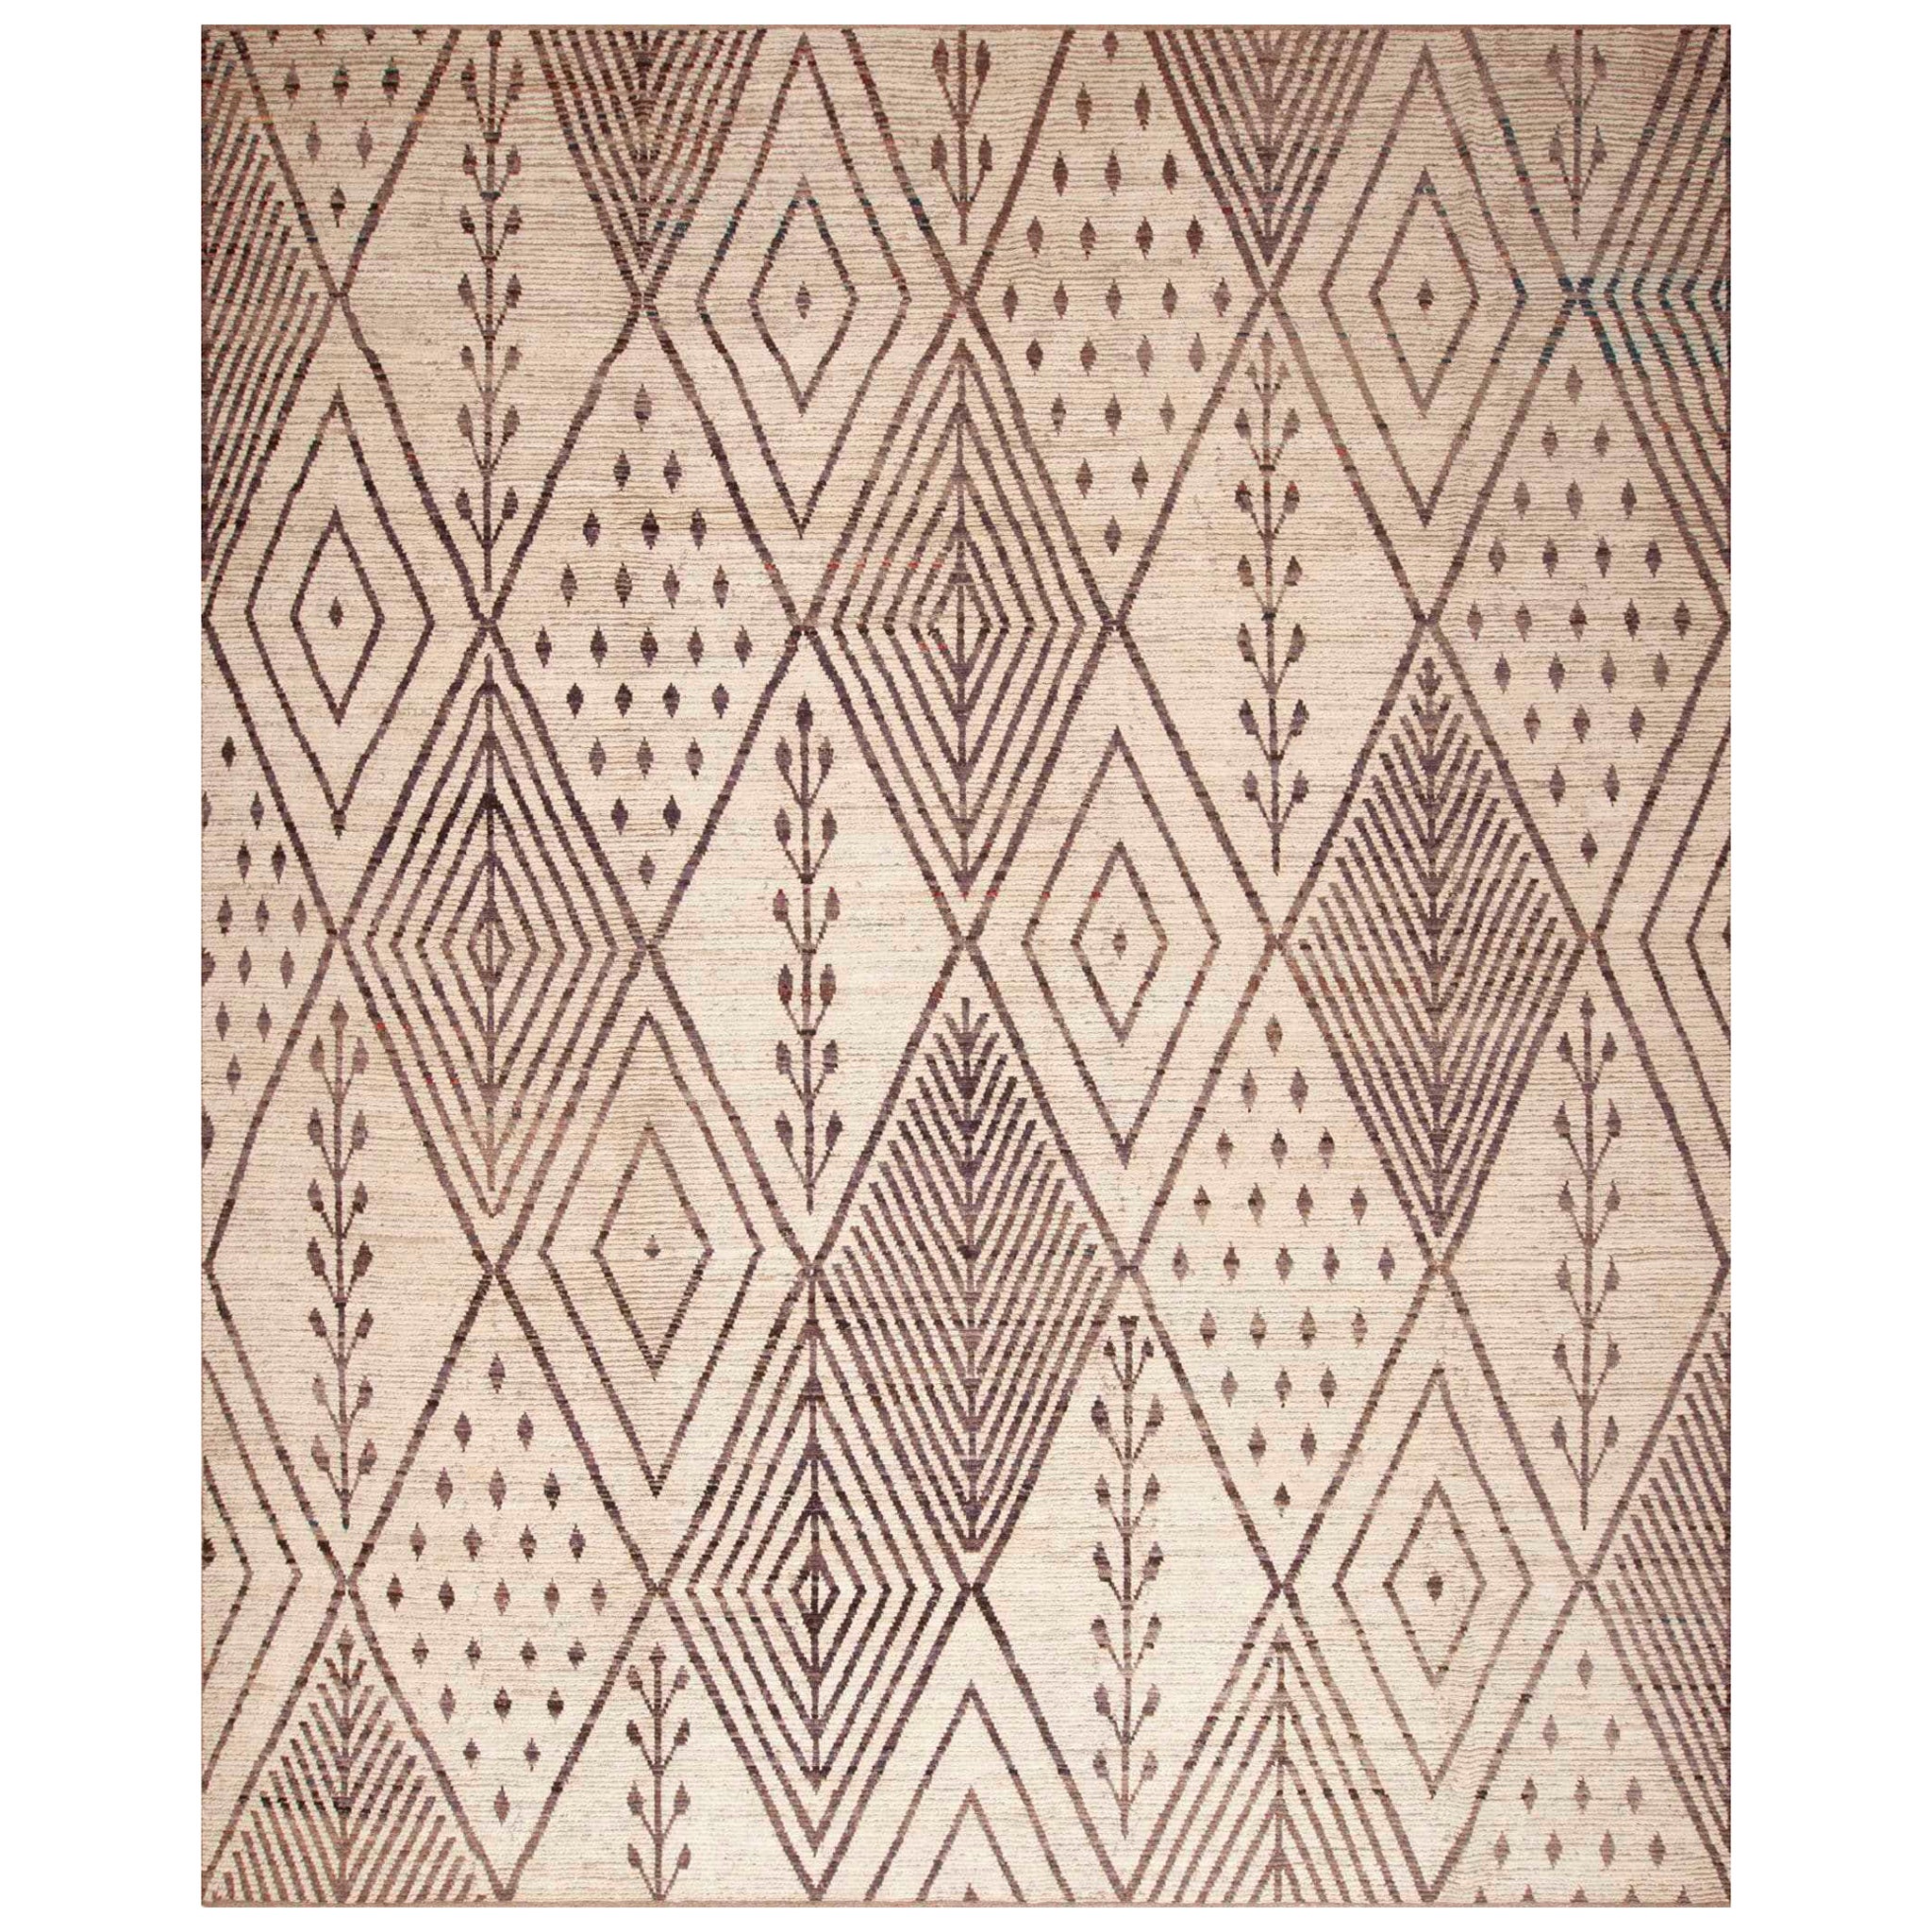 Collection Nazmiyal Tribal Geometric Beni Ourain Design Modern Rug 12' x 15'3"